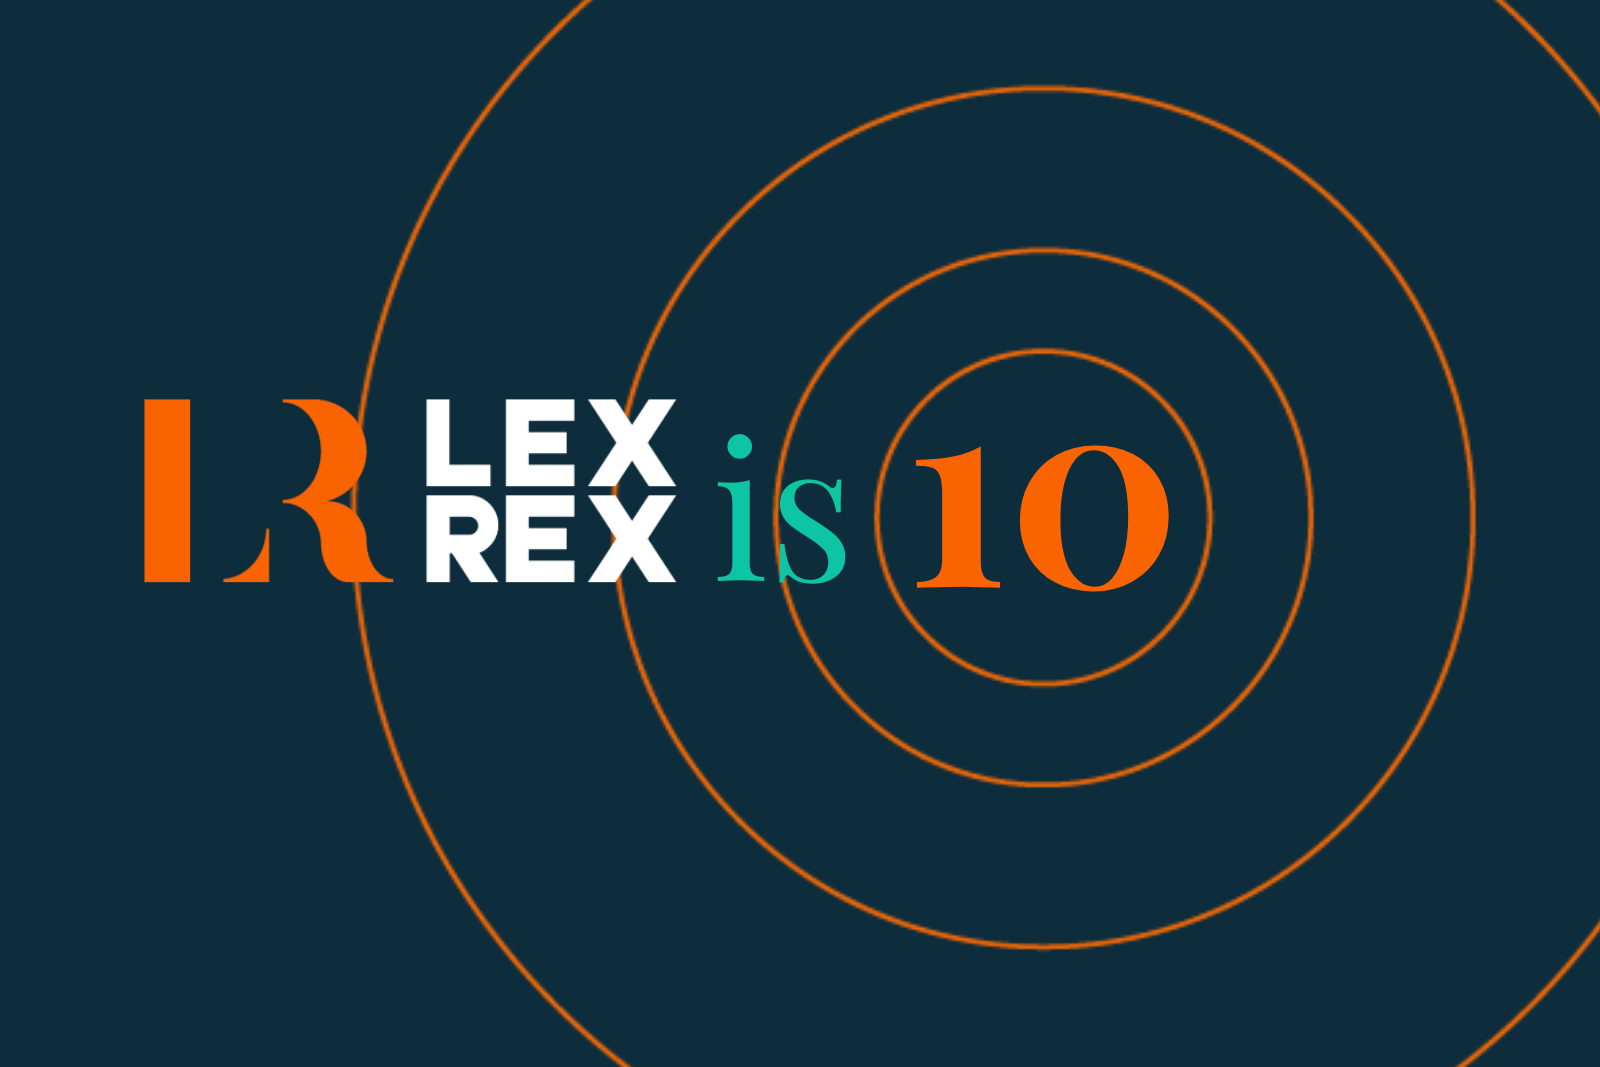 LEXREX IS 10